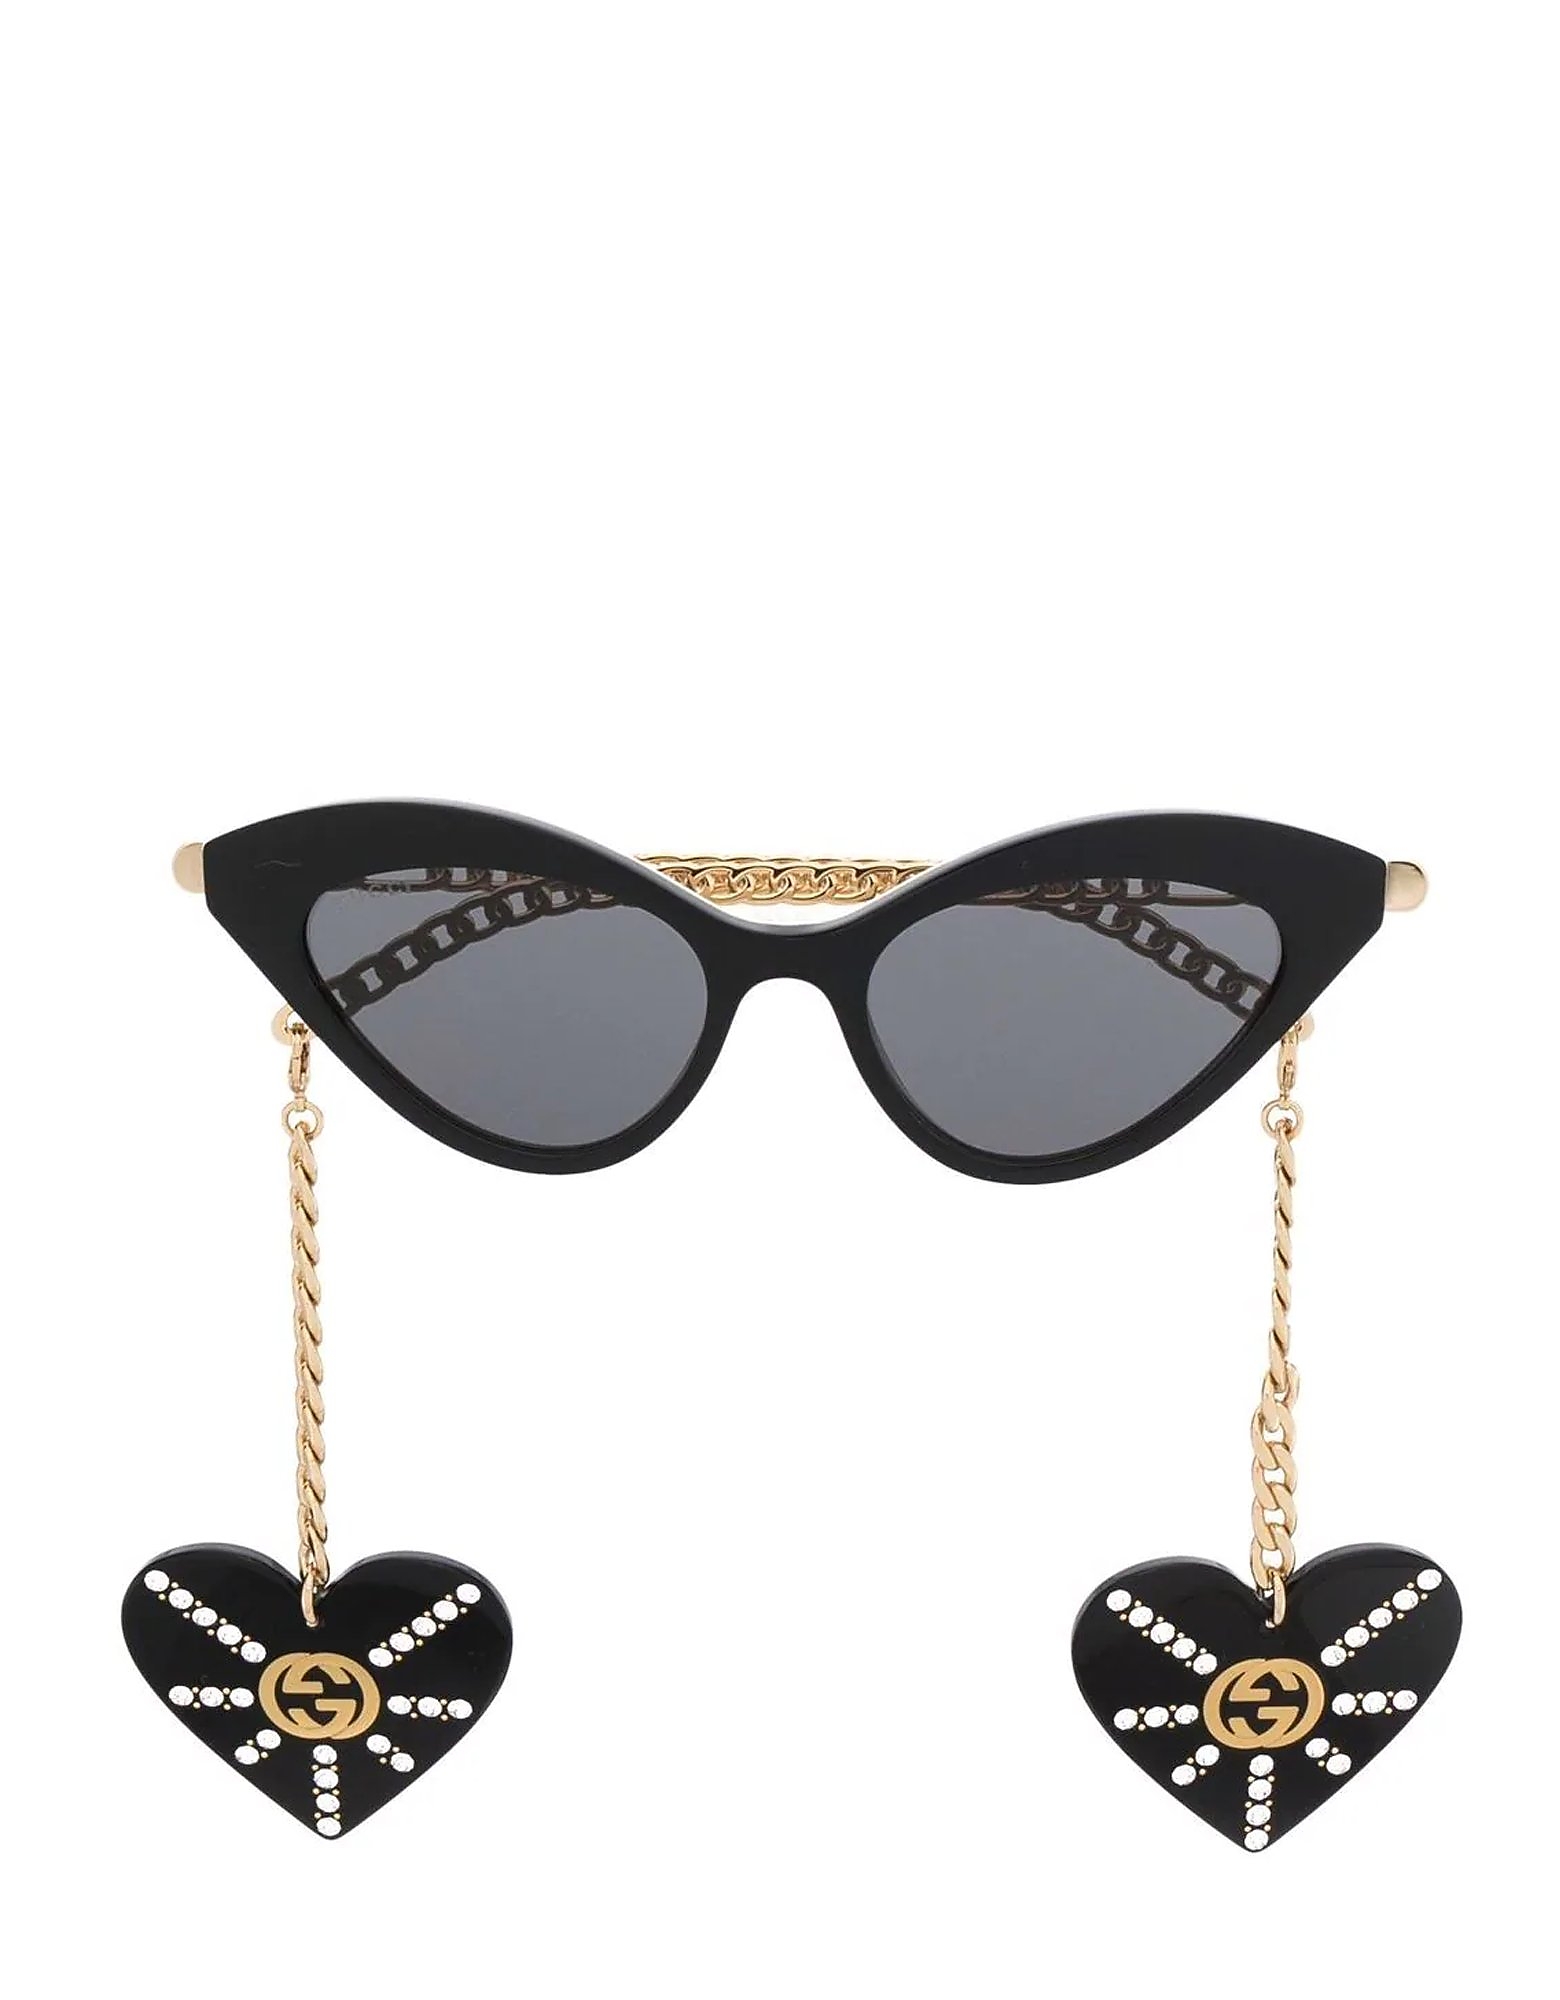 Gucci Sunglasses Black Cat-Eye frame Acetate Women's Sunglasses w/Charms